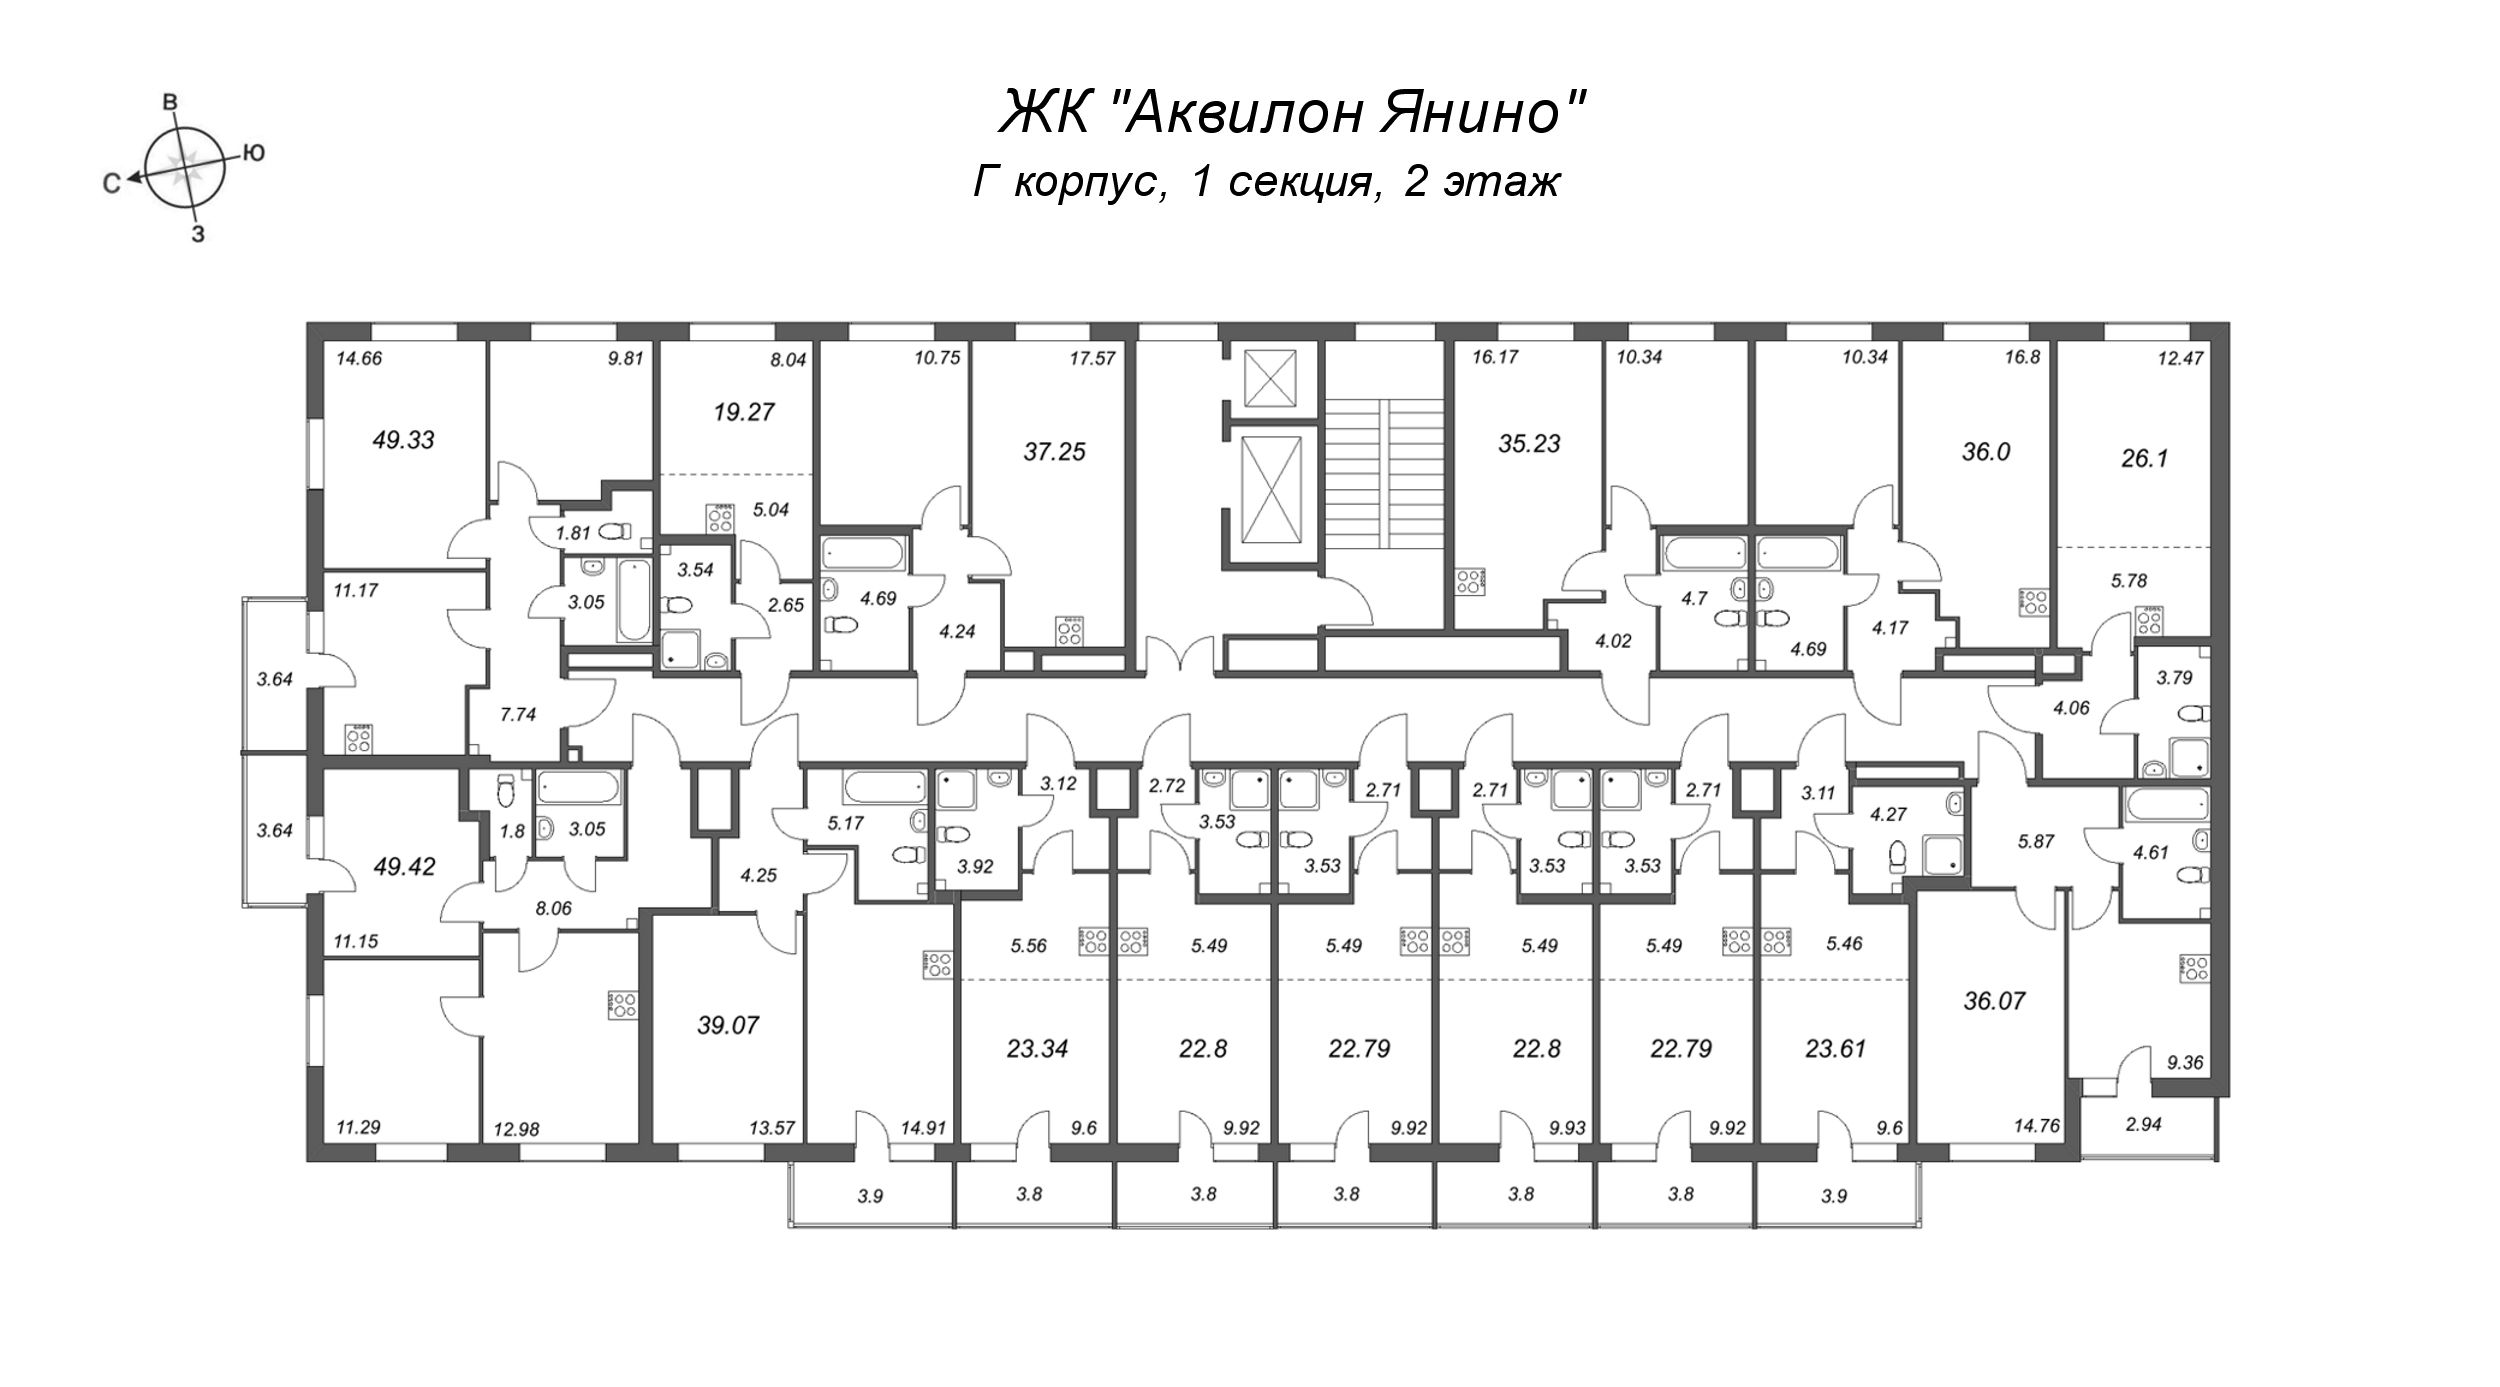 2-комнатная (Евро) квартира, 35.23 м² в ЖК "Аквилон Янино" - планировка этажа